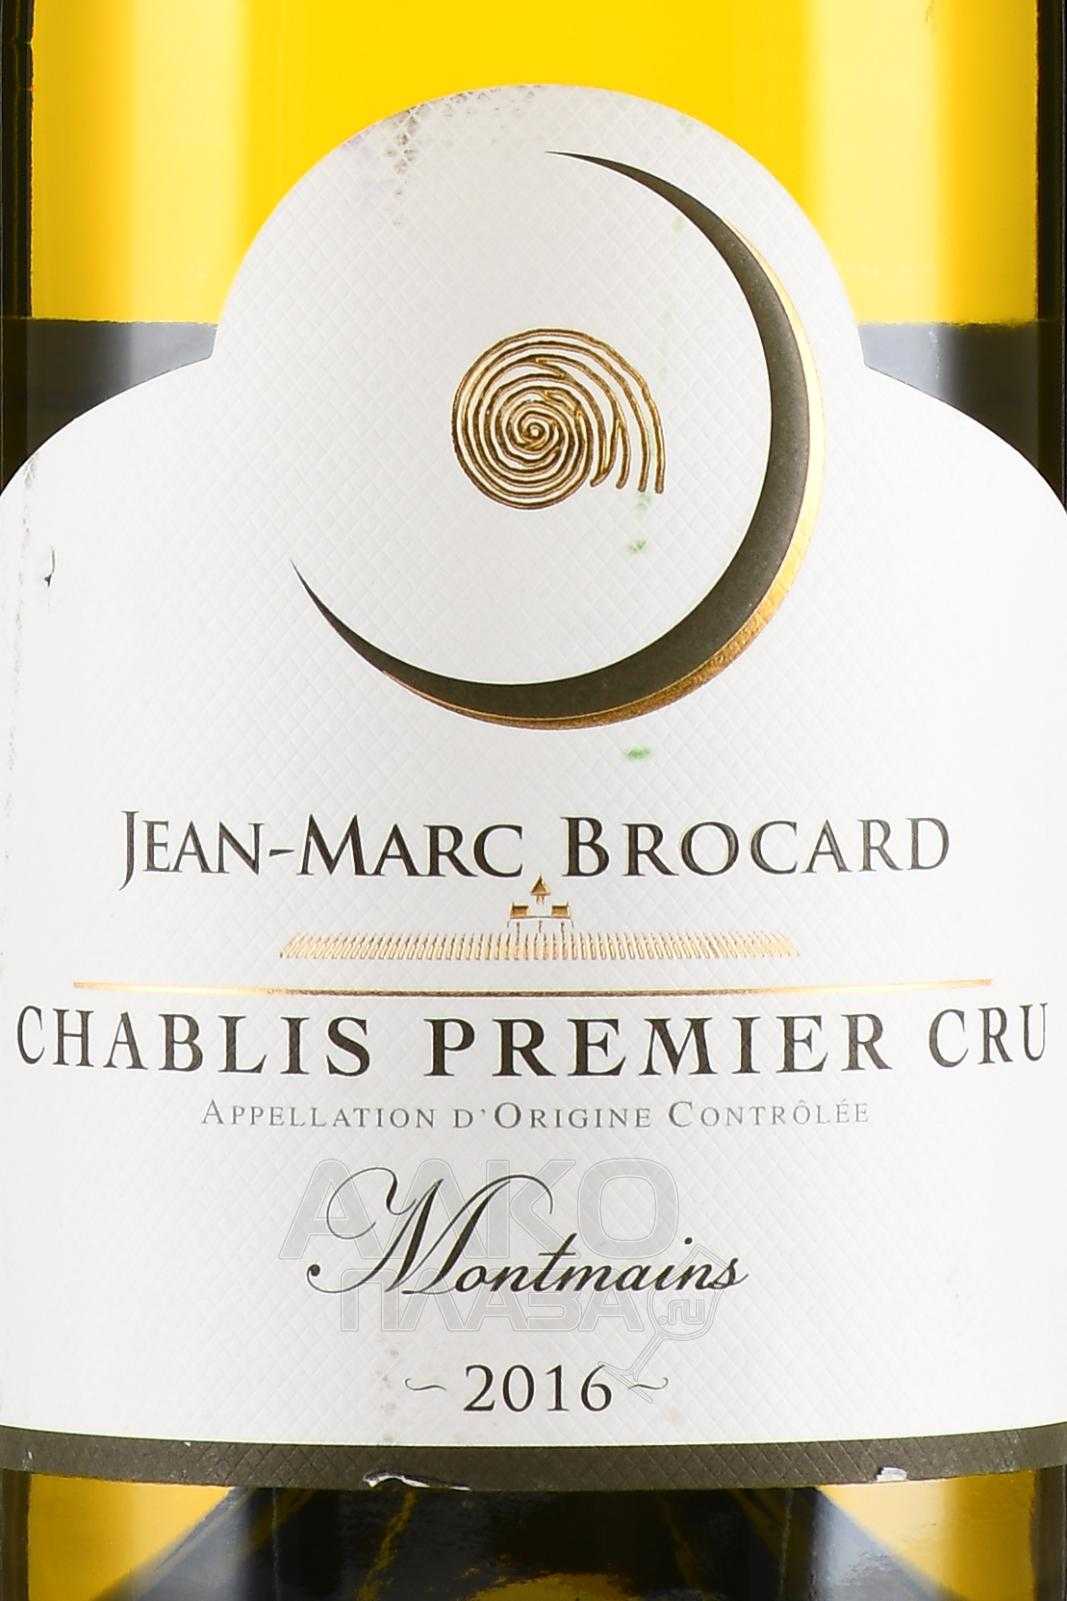 Jean-marc brocard in chablis | tomas's wine blog